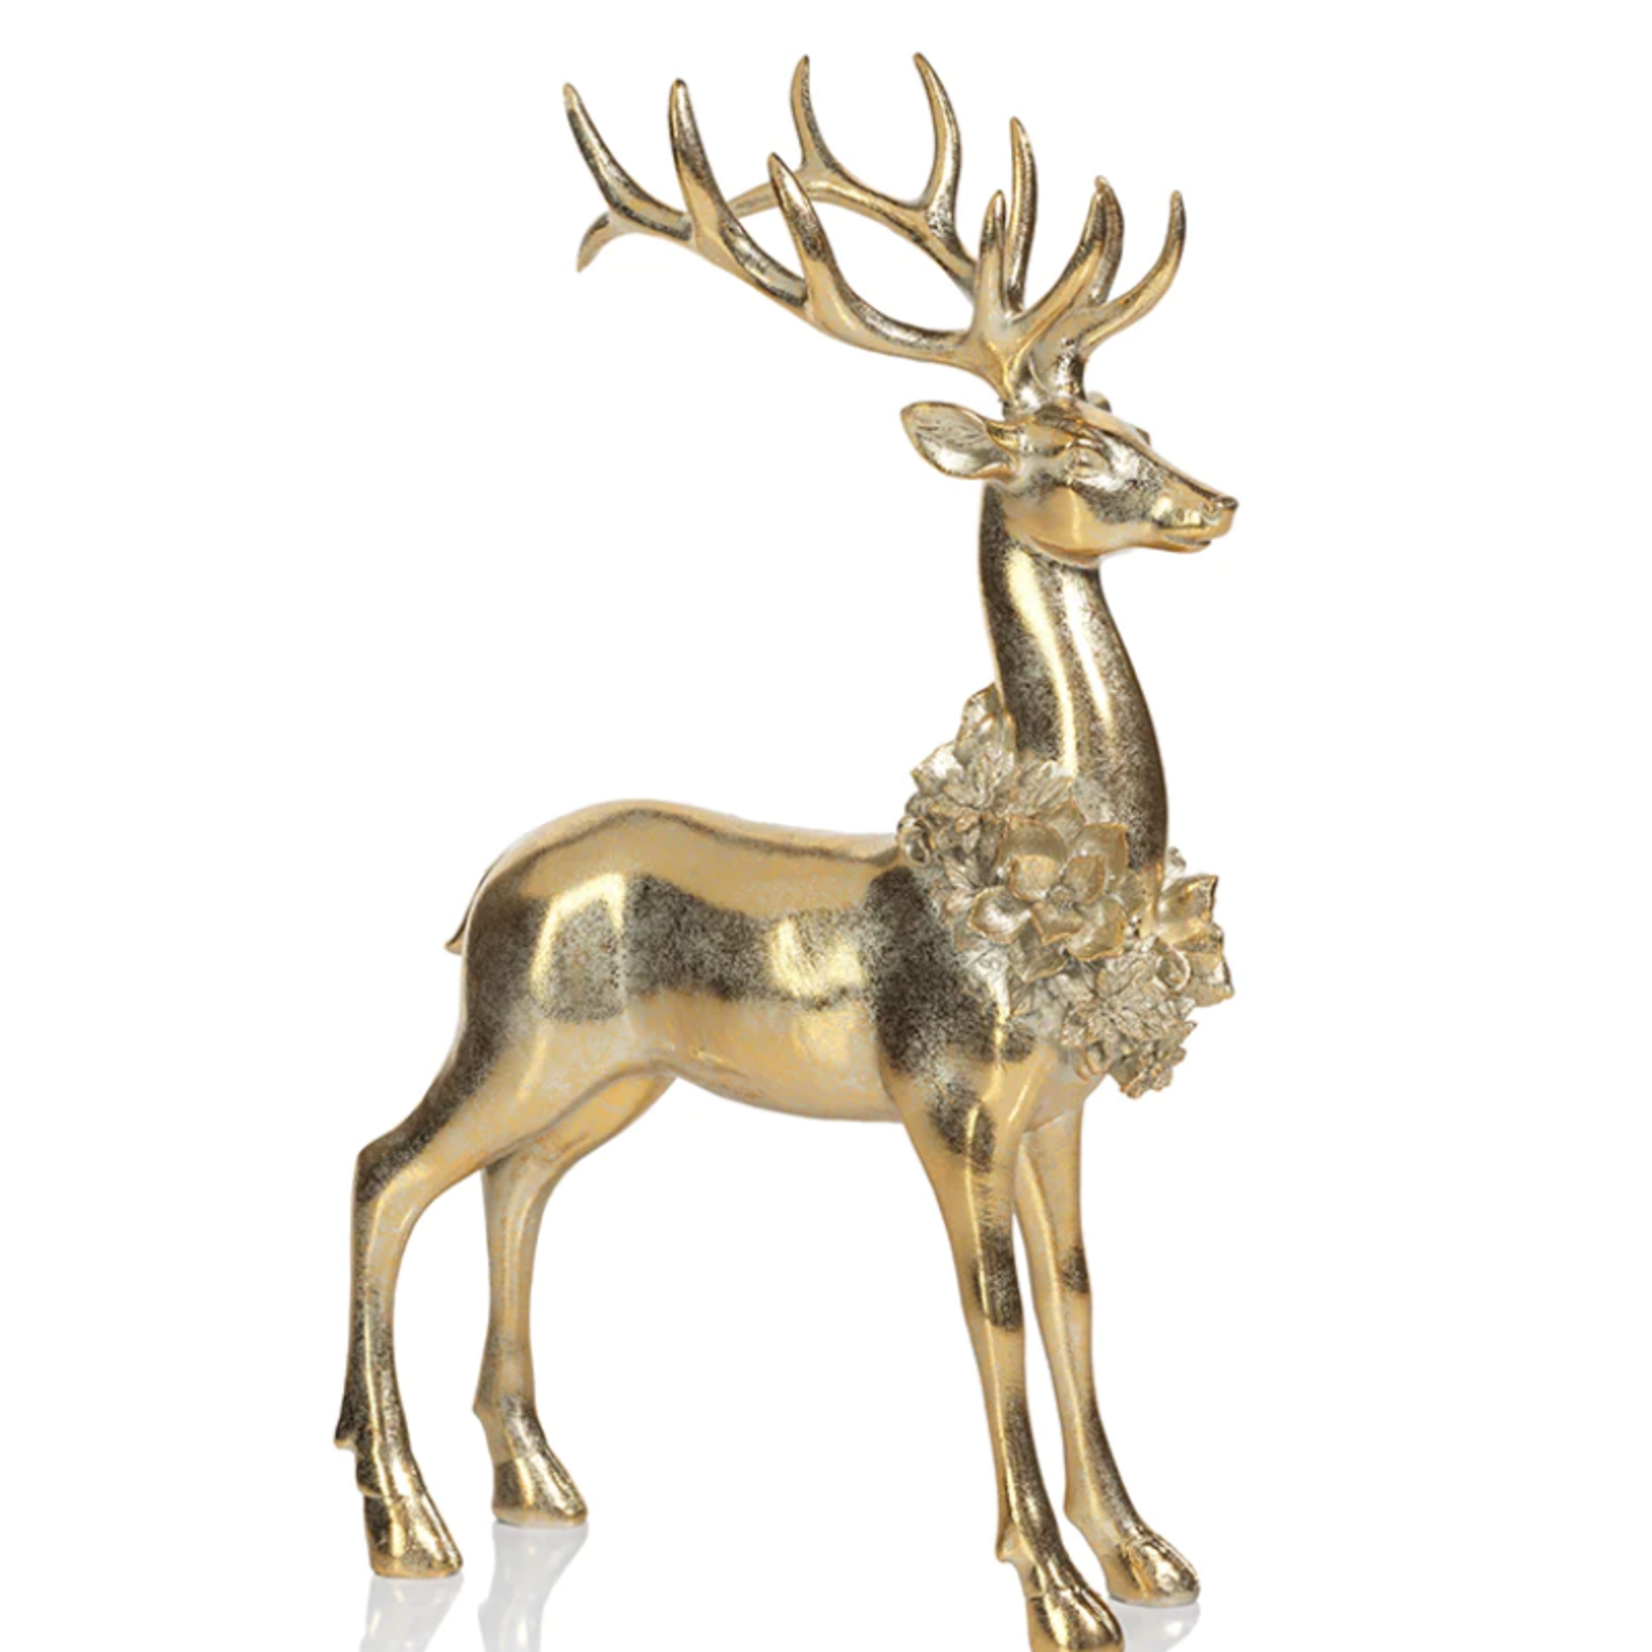 zodax Golden Deer with Floral Wreath - Standing